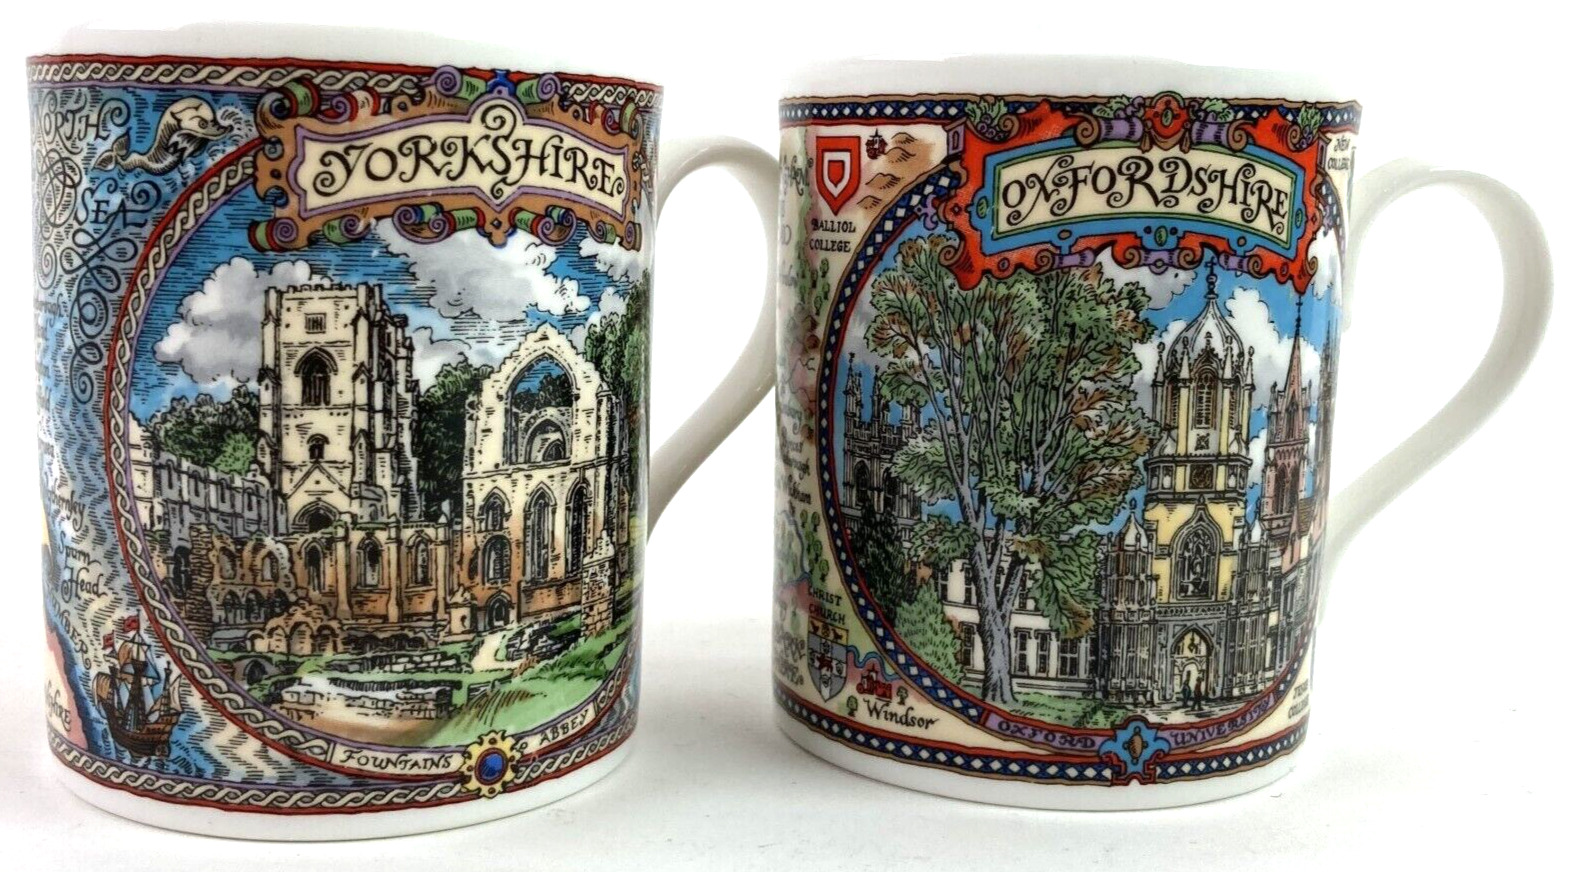 British Heritage Mugs Oxfordshire & Yorkshire Inspired Vintage 17th Century Maps